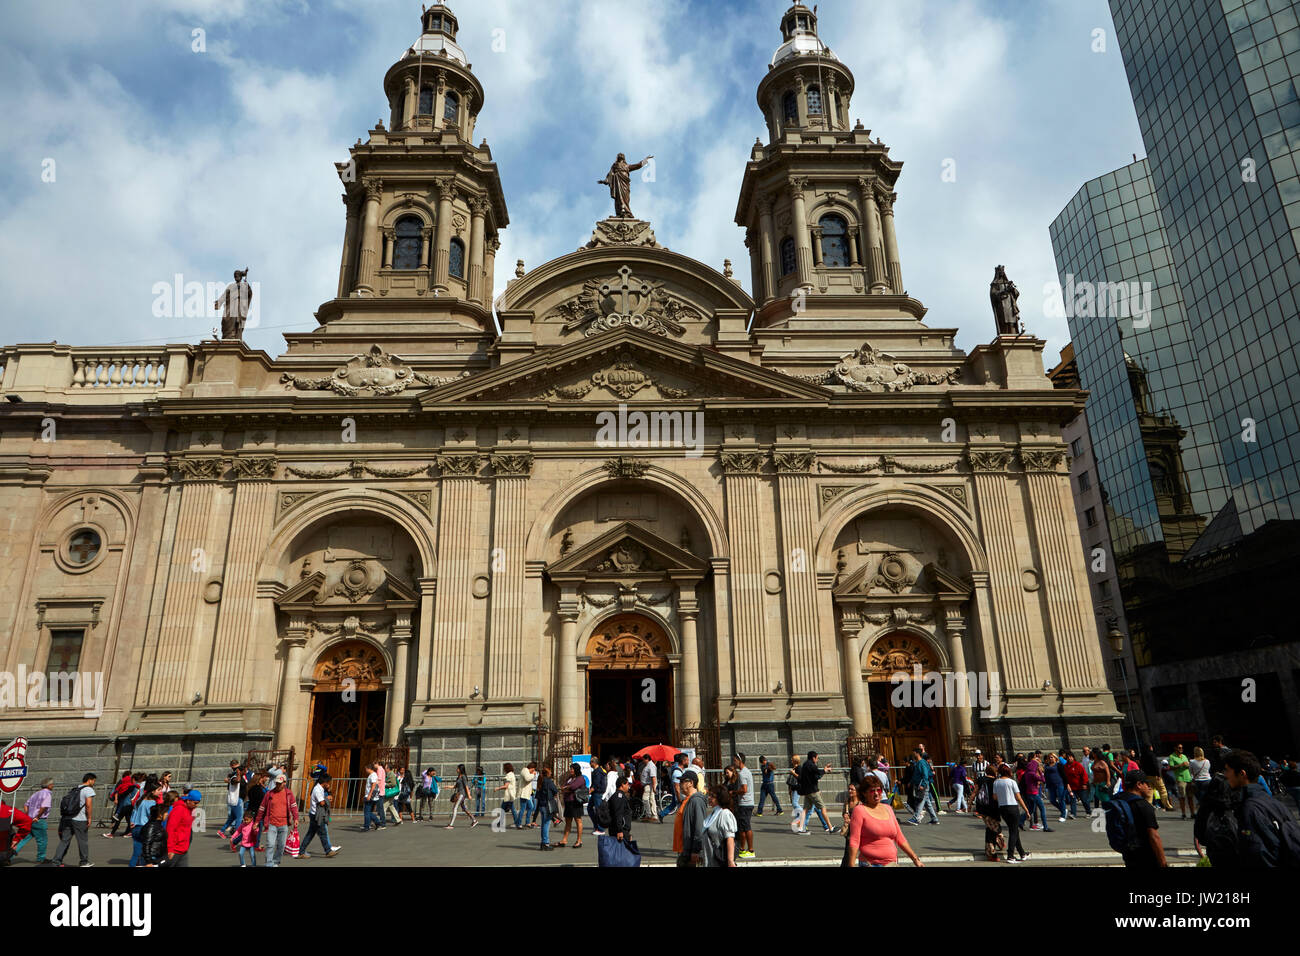 Metropolitan Cathedral of Santiago (built between 1748 and 1800), Plaza de Armas, Santiago, Chile, South America Stock Photo